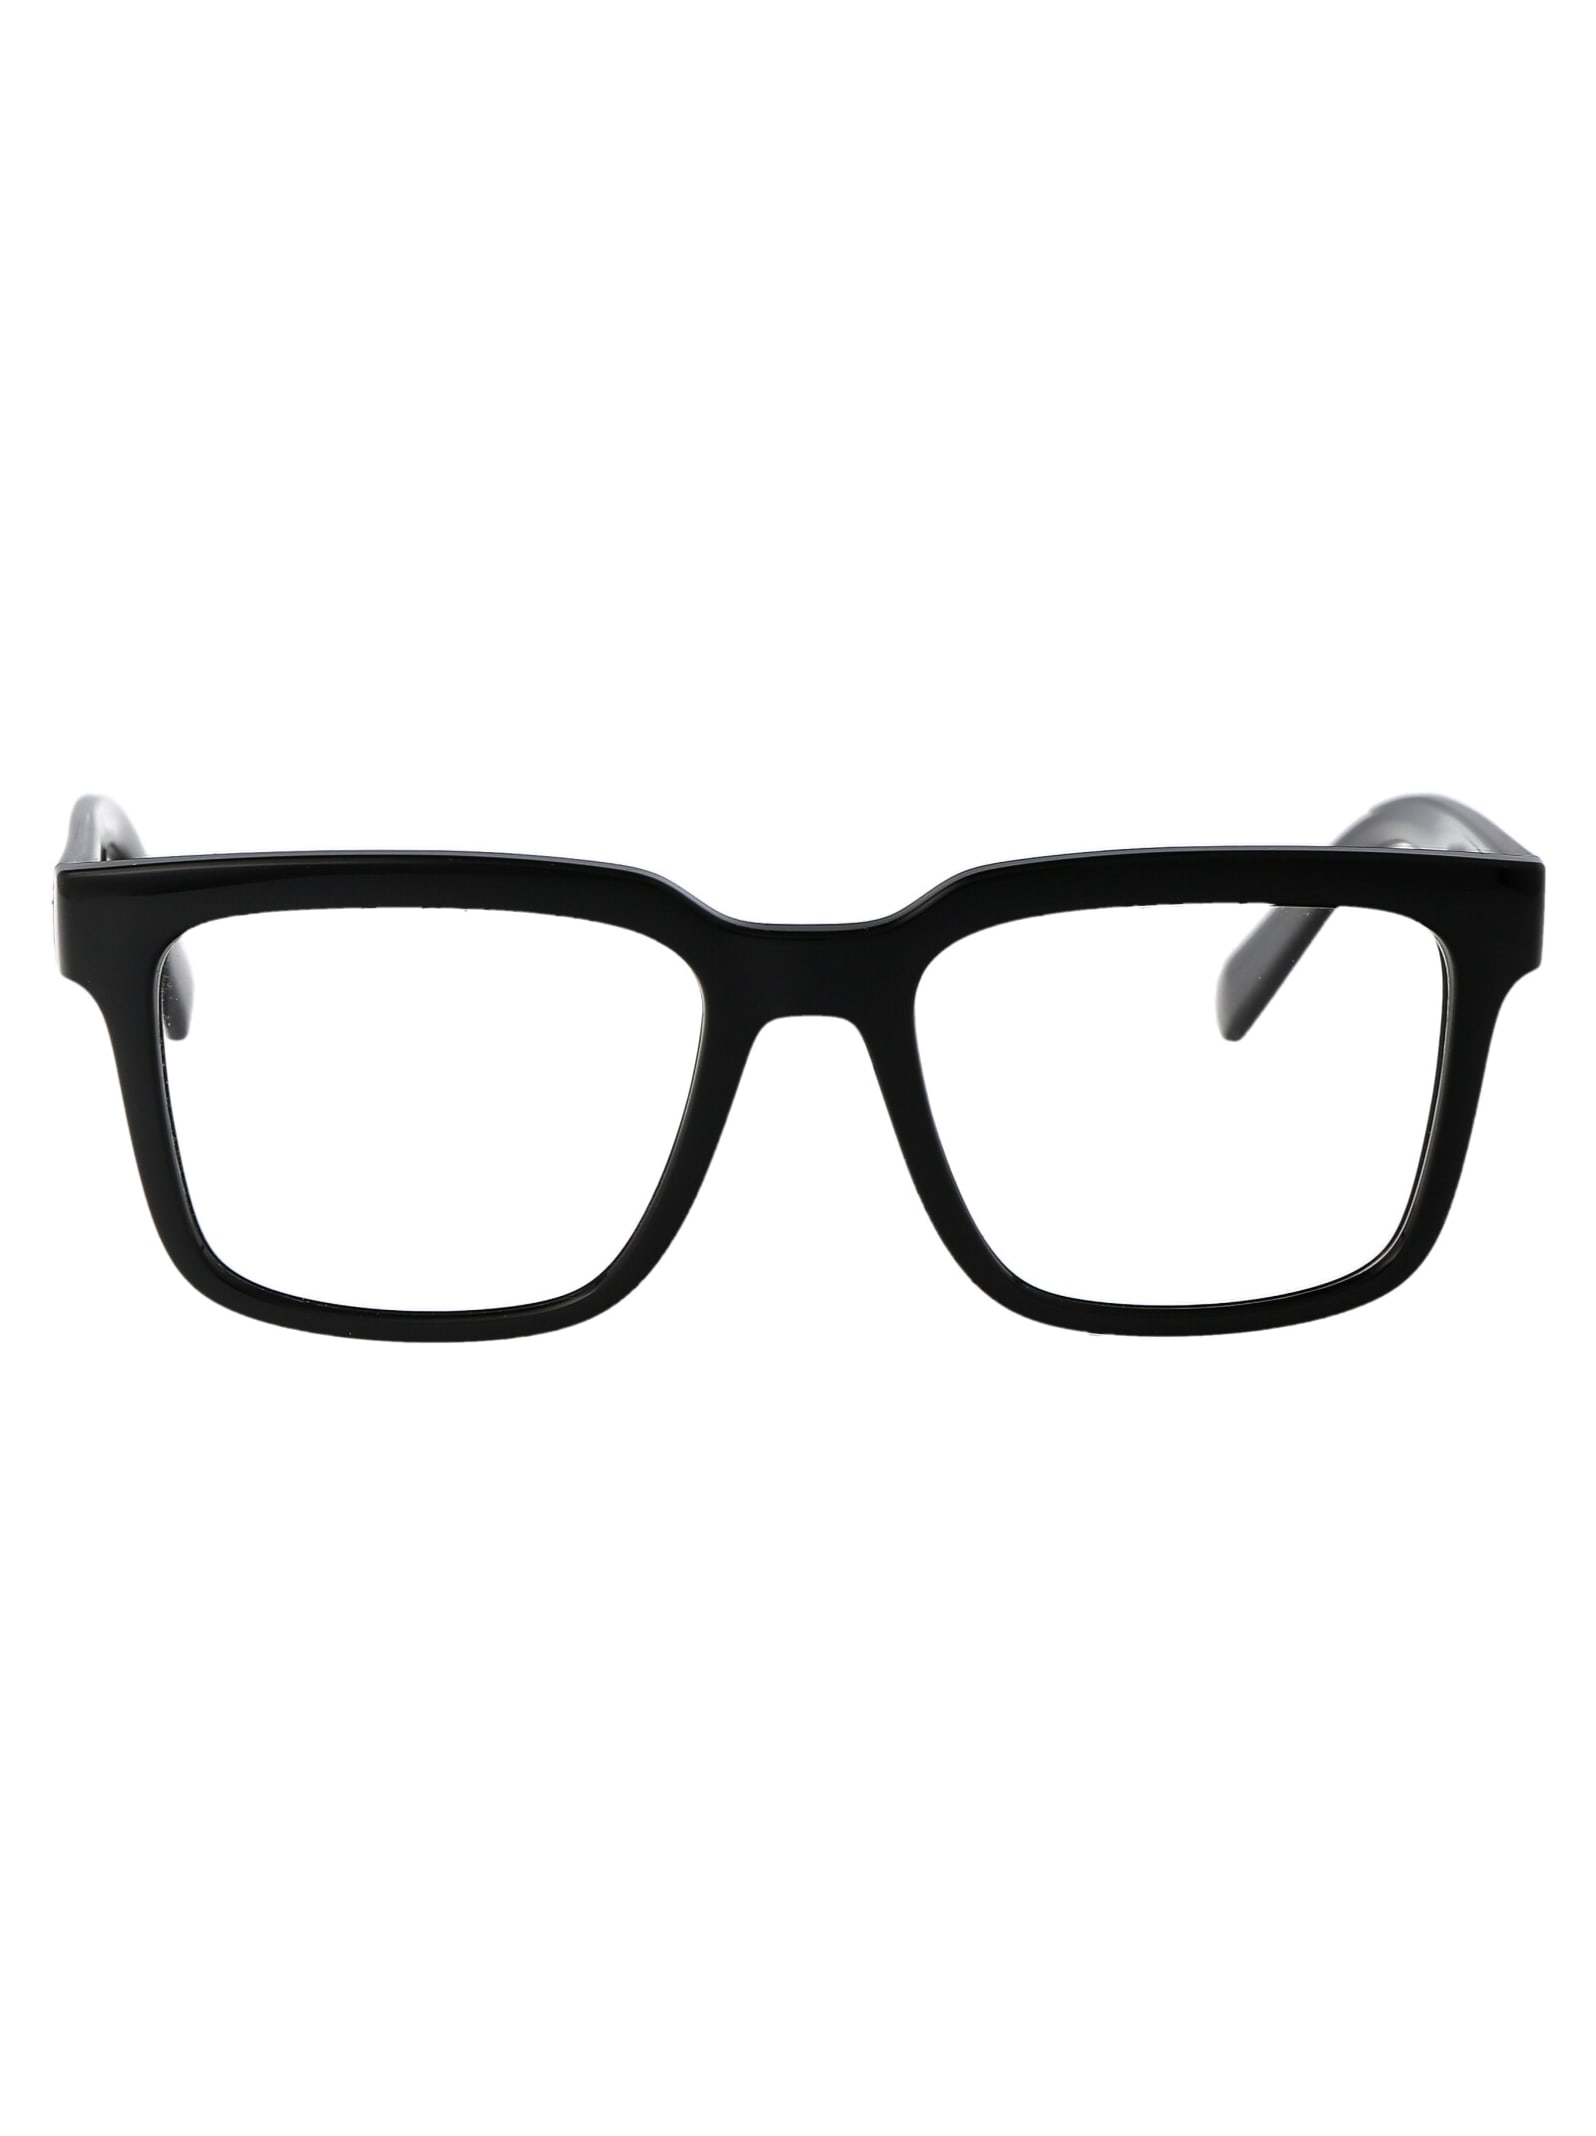 0dg5101 Glasses